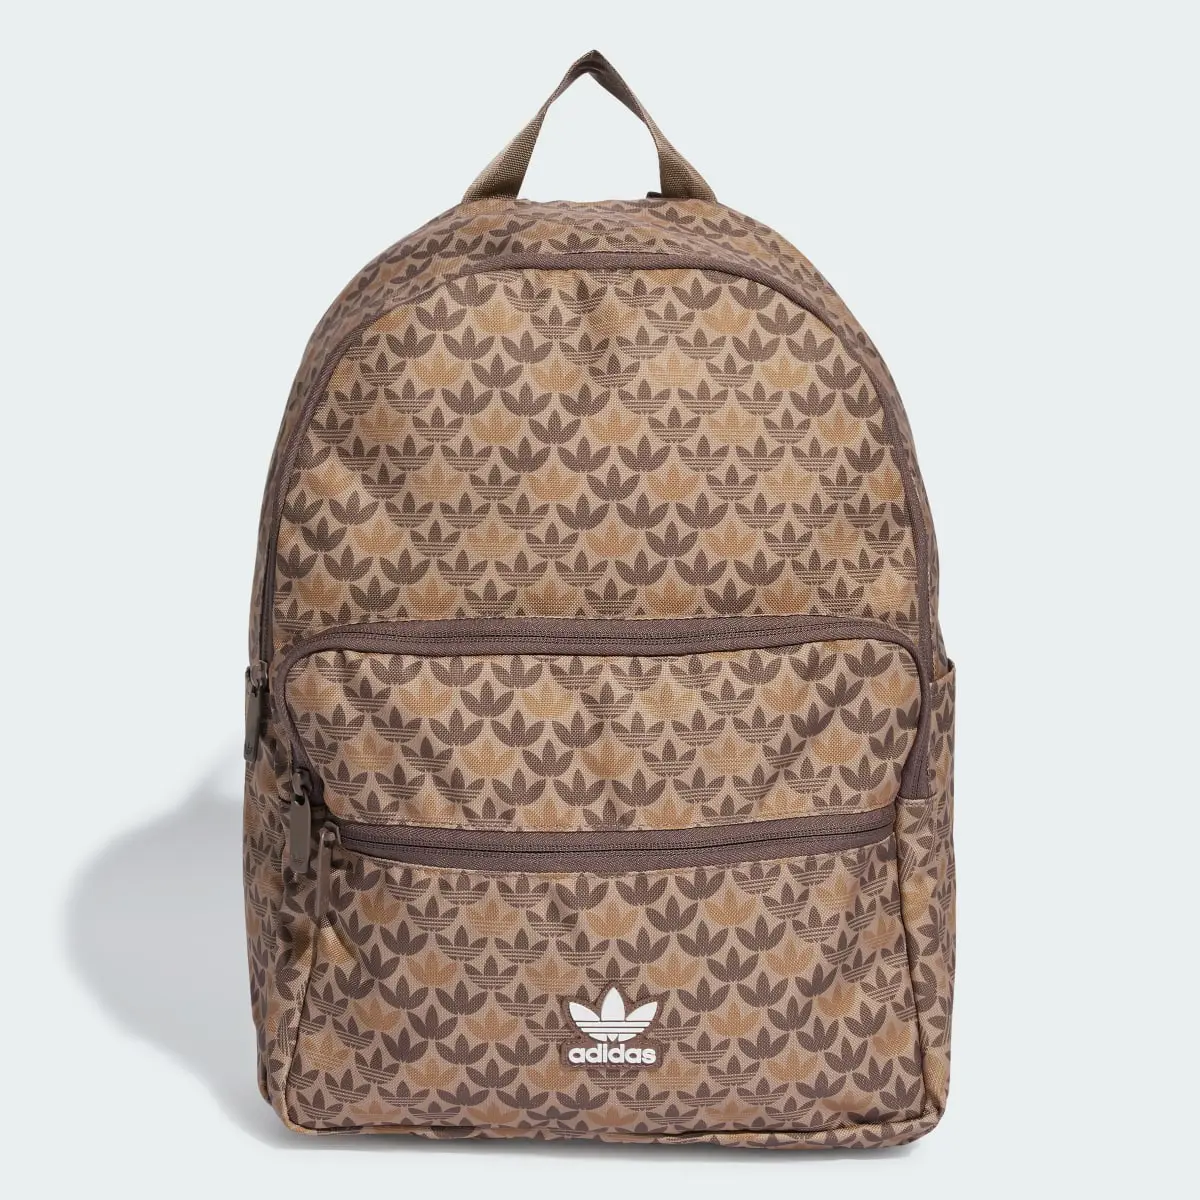 Adidas Monogram Backpack. 1